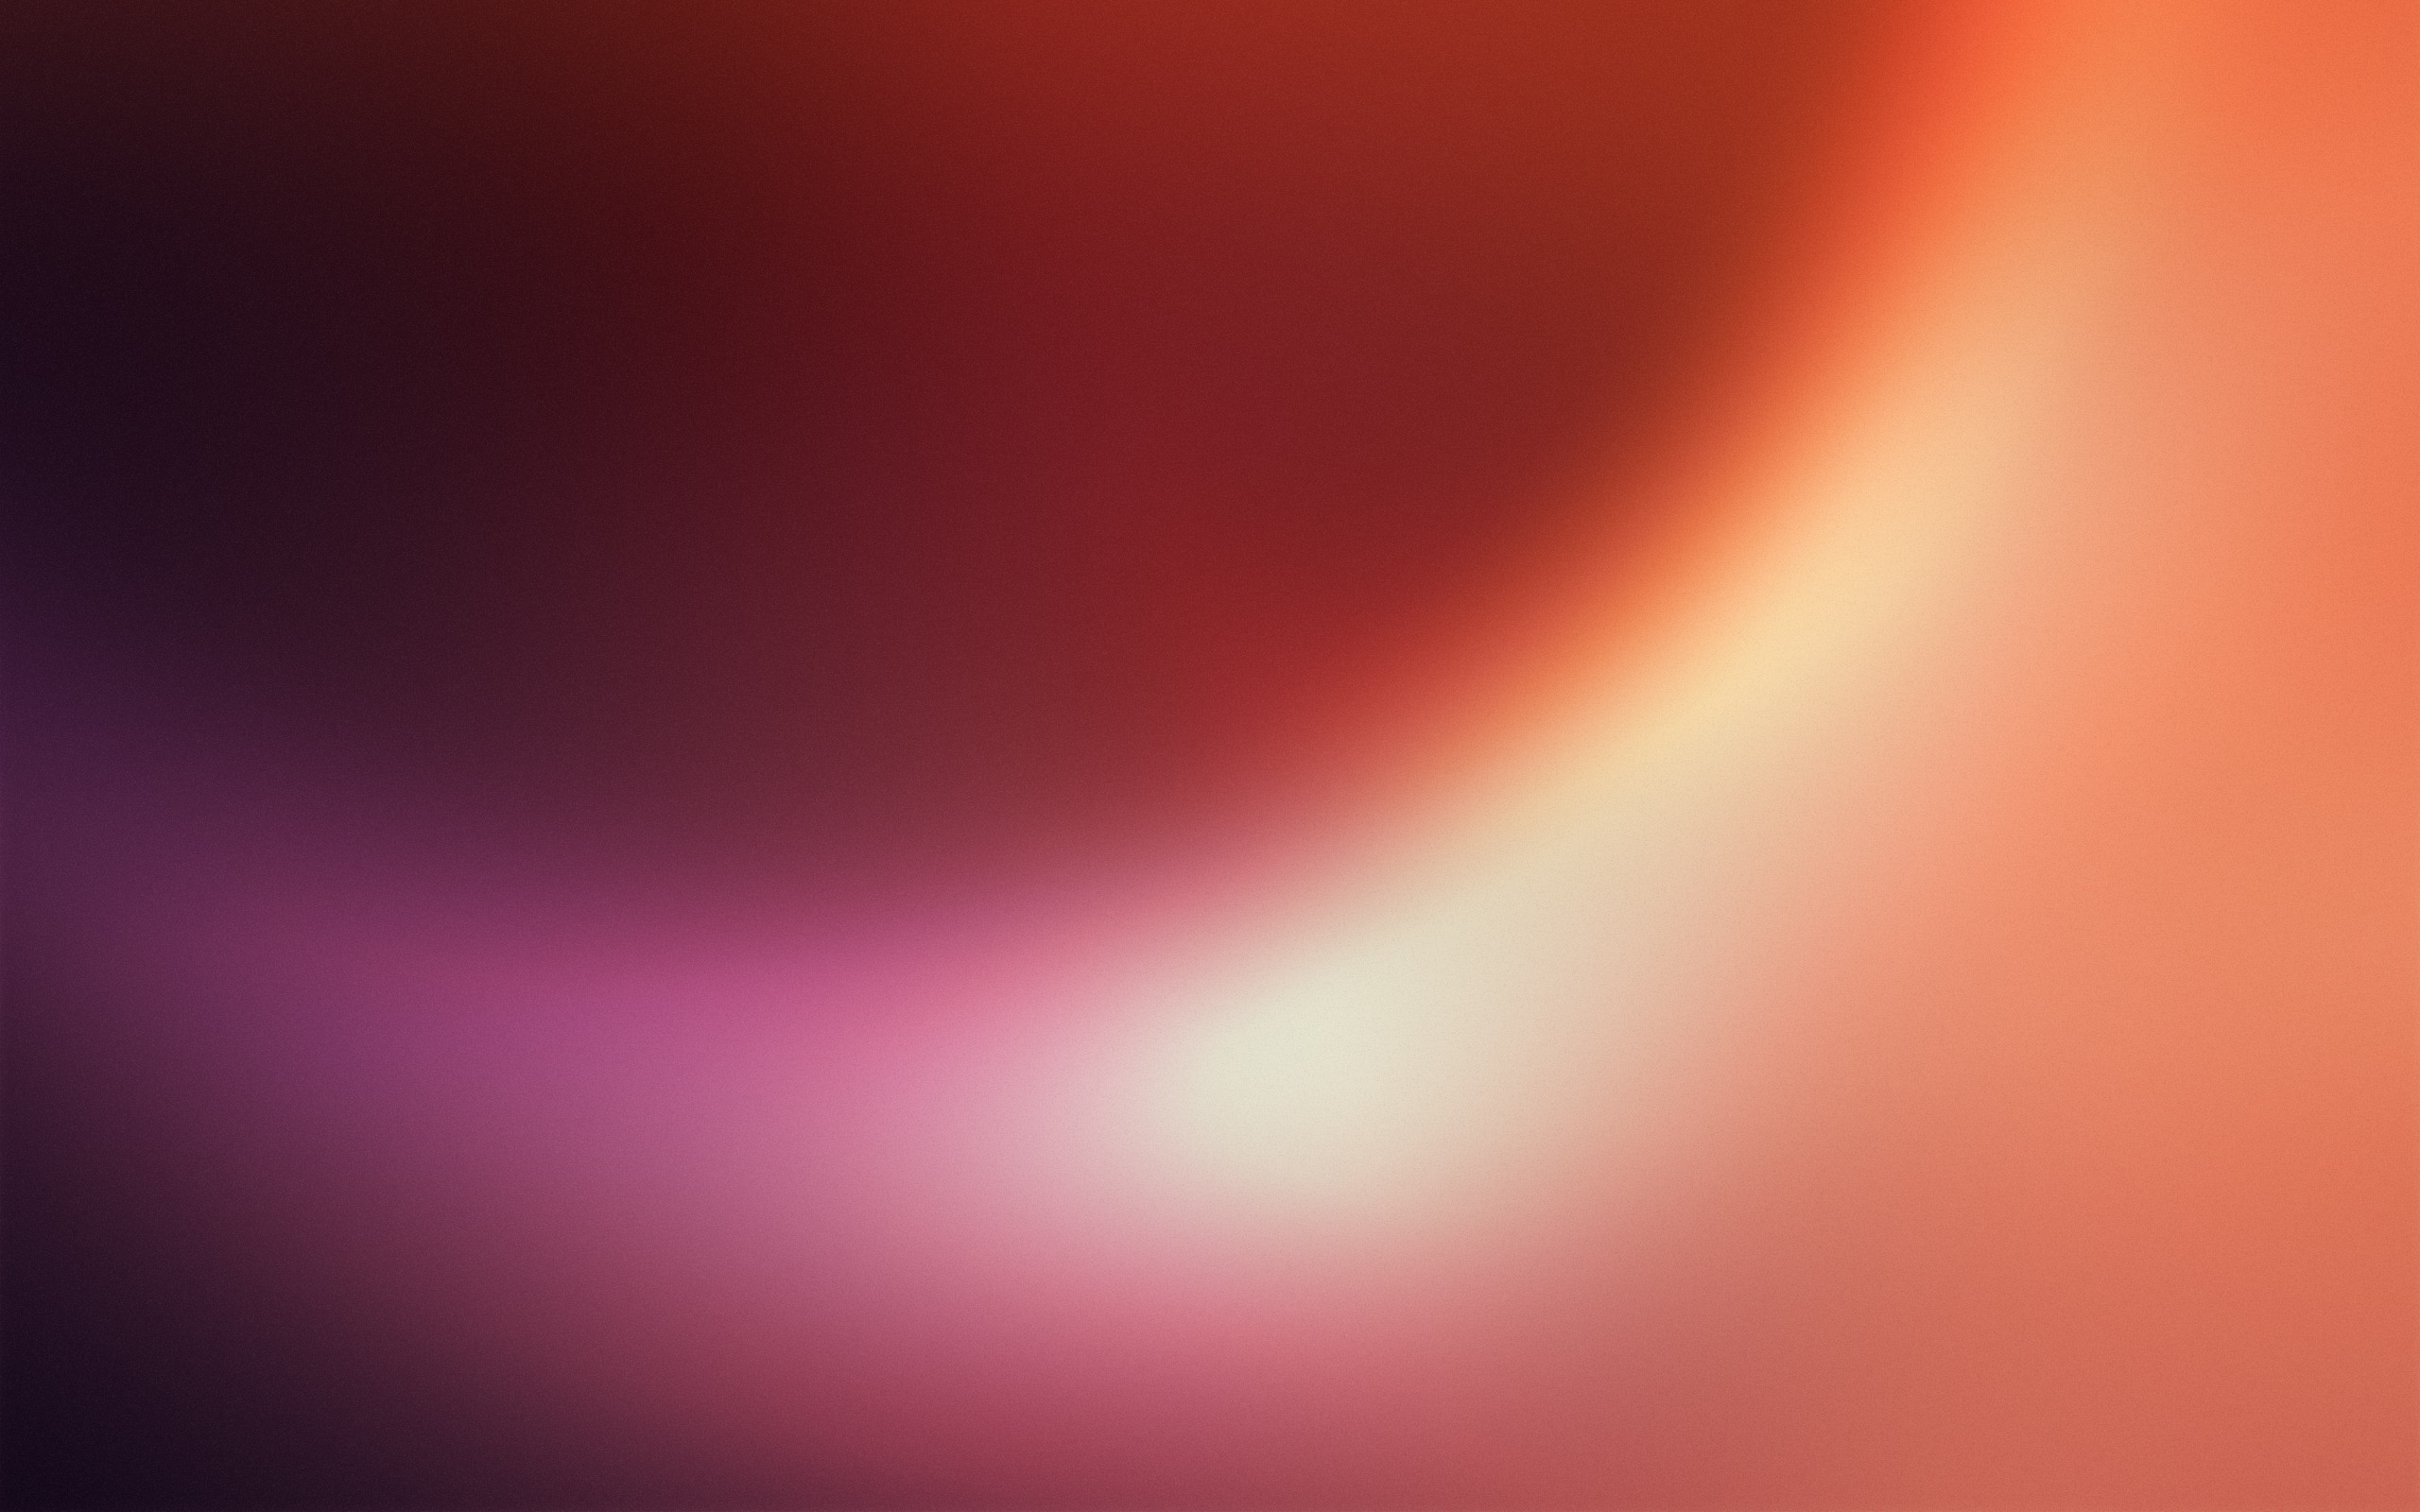 ubuntu wallpaper,rot,himmel,orange,licht,rosa